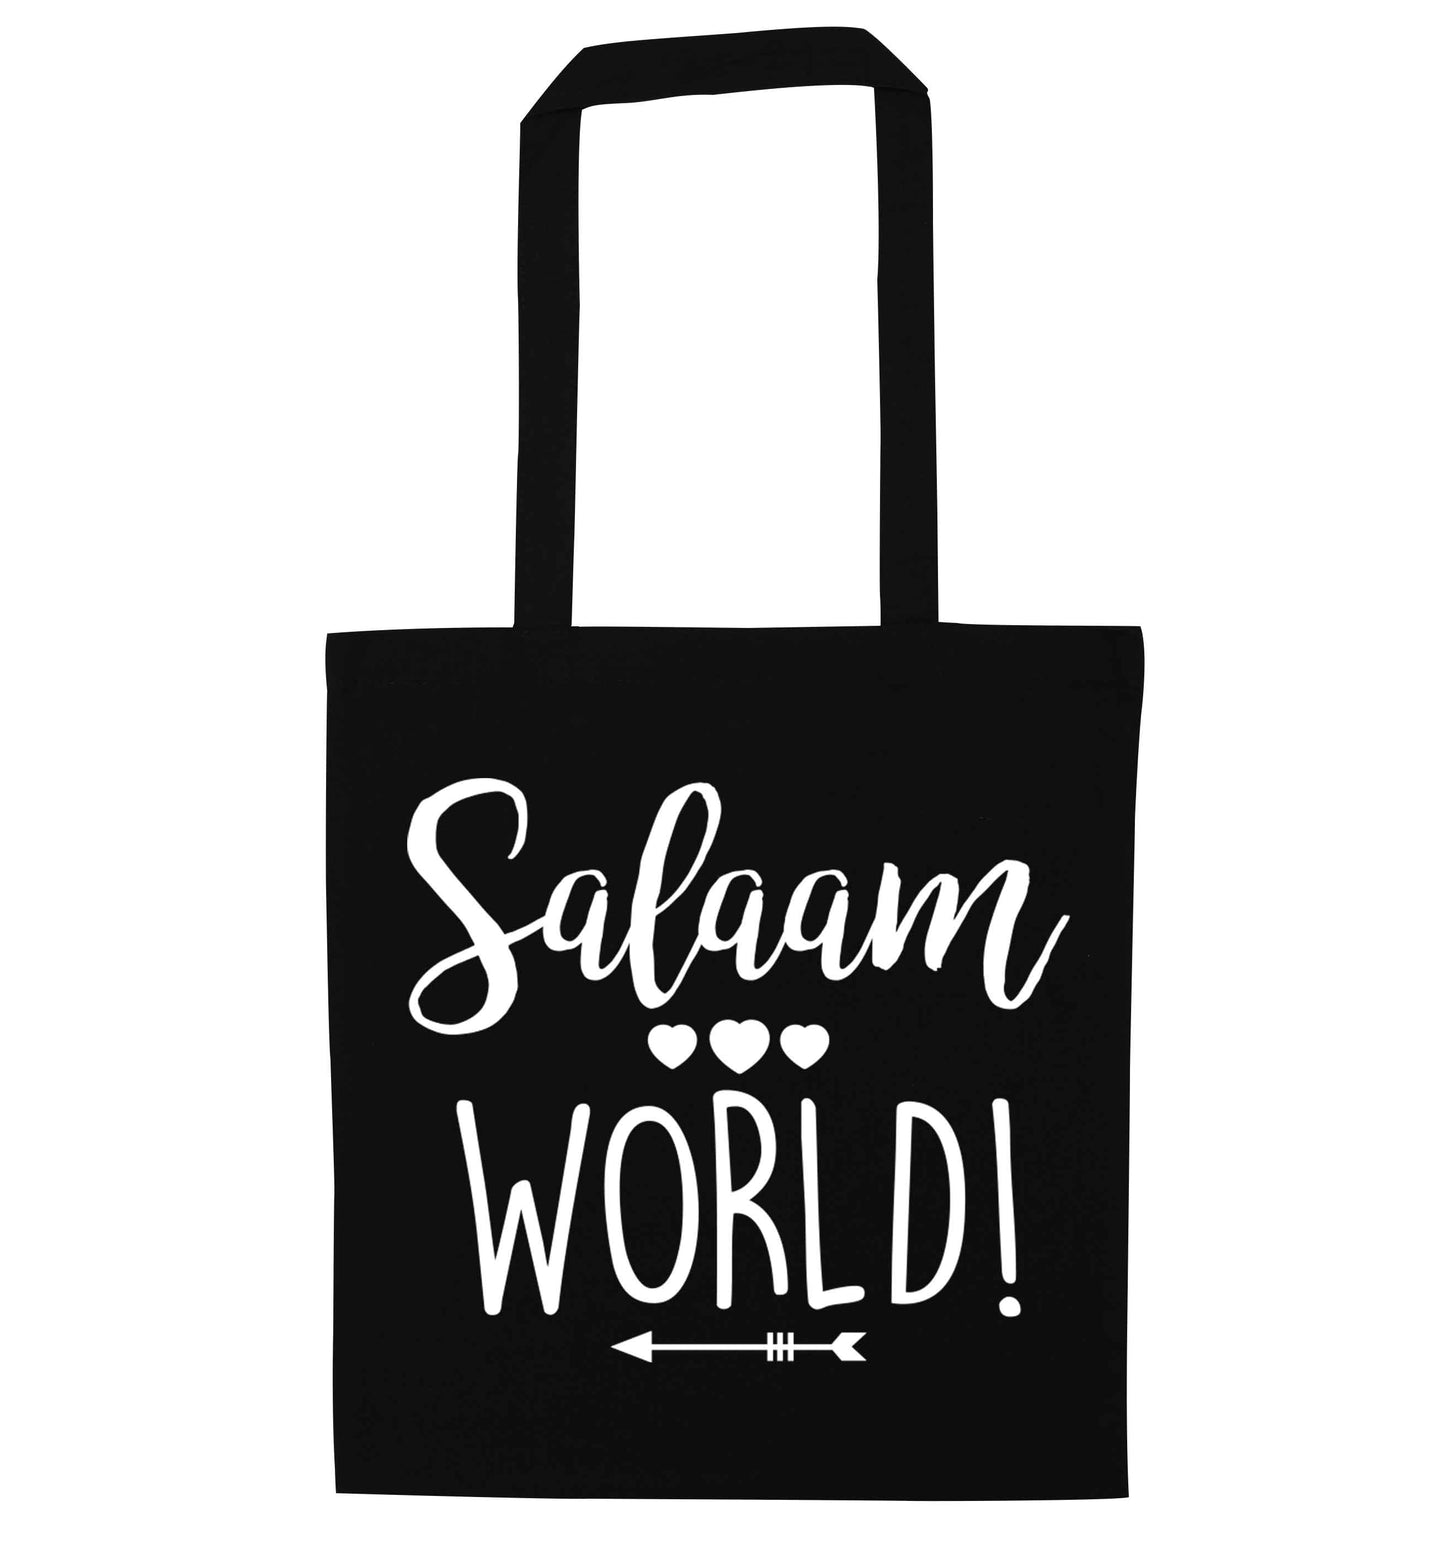 Salaam world black tote bag